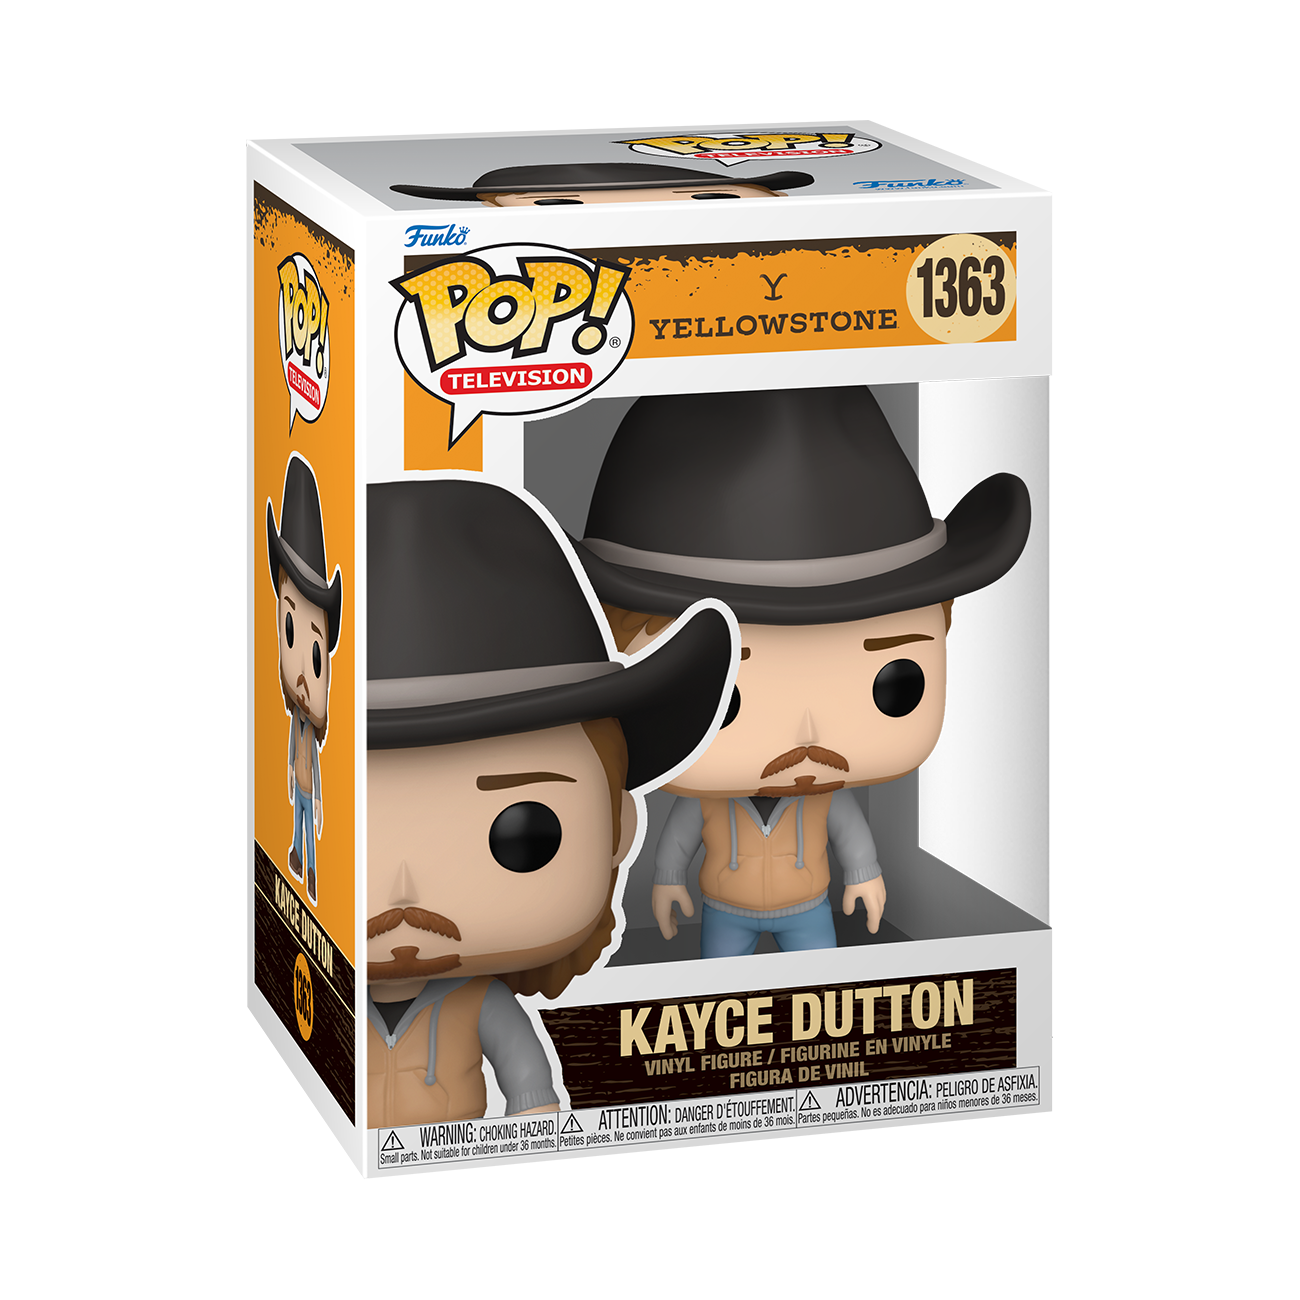 Yellowstone Kayce Dutton Funko Vinyl Figure |